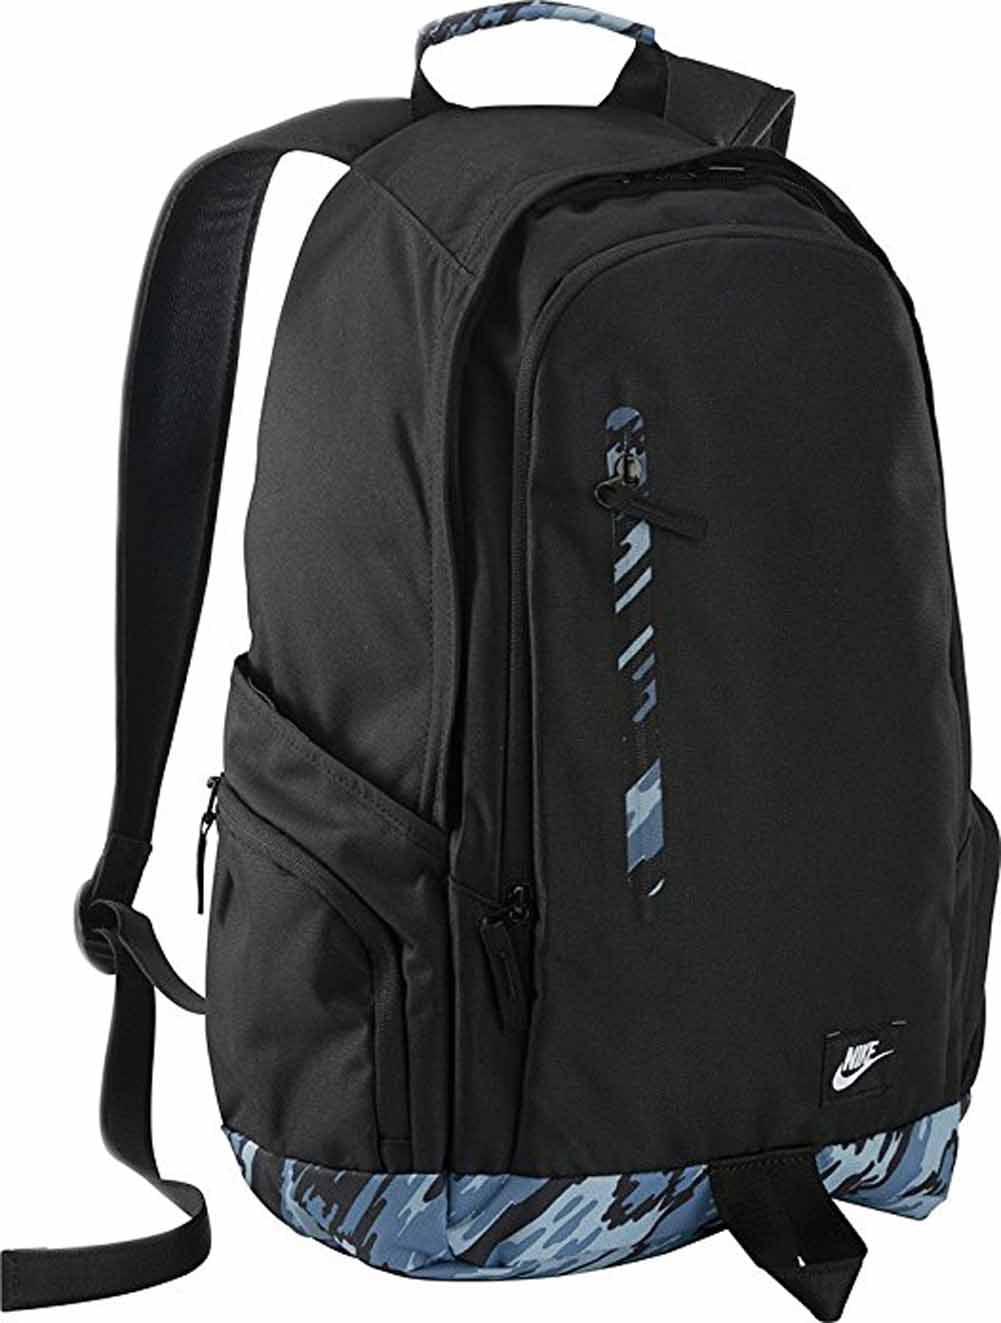 bruscamente intimidad Cielo All Access Fullfare Backpack Black/Blue - Walmart.com